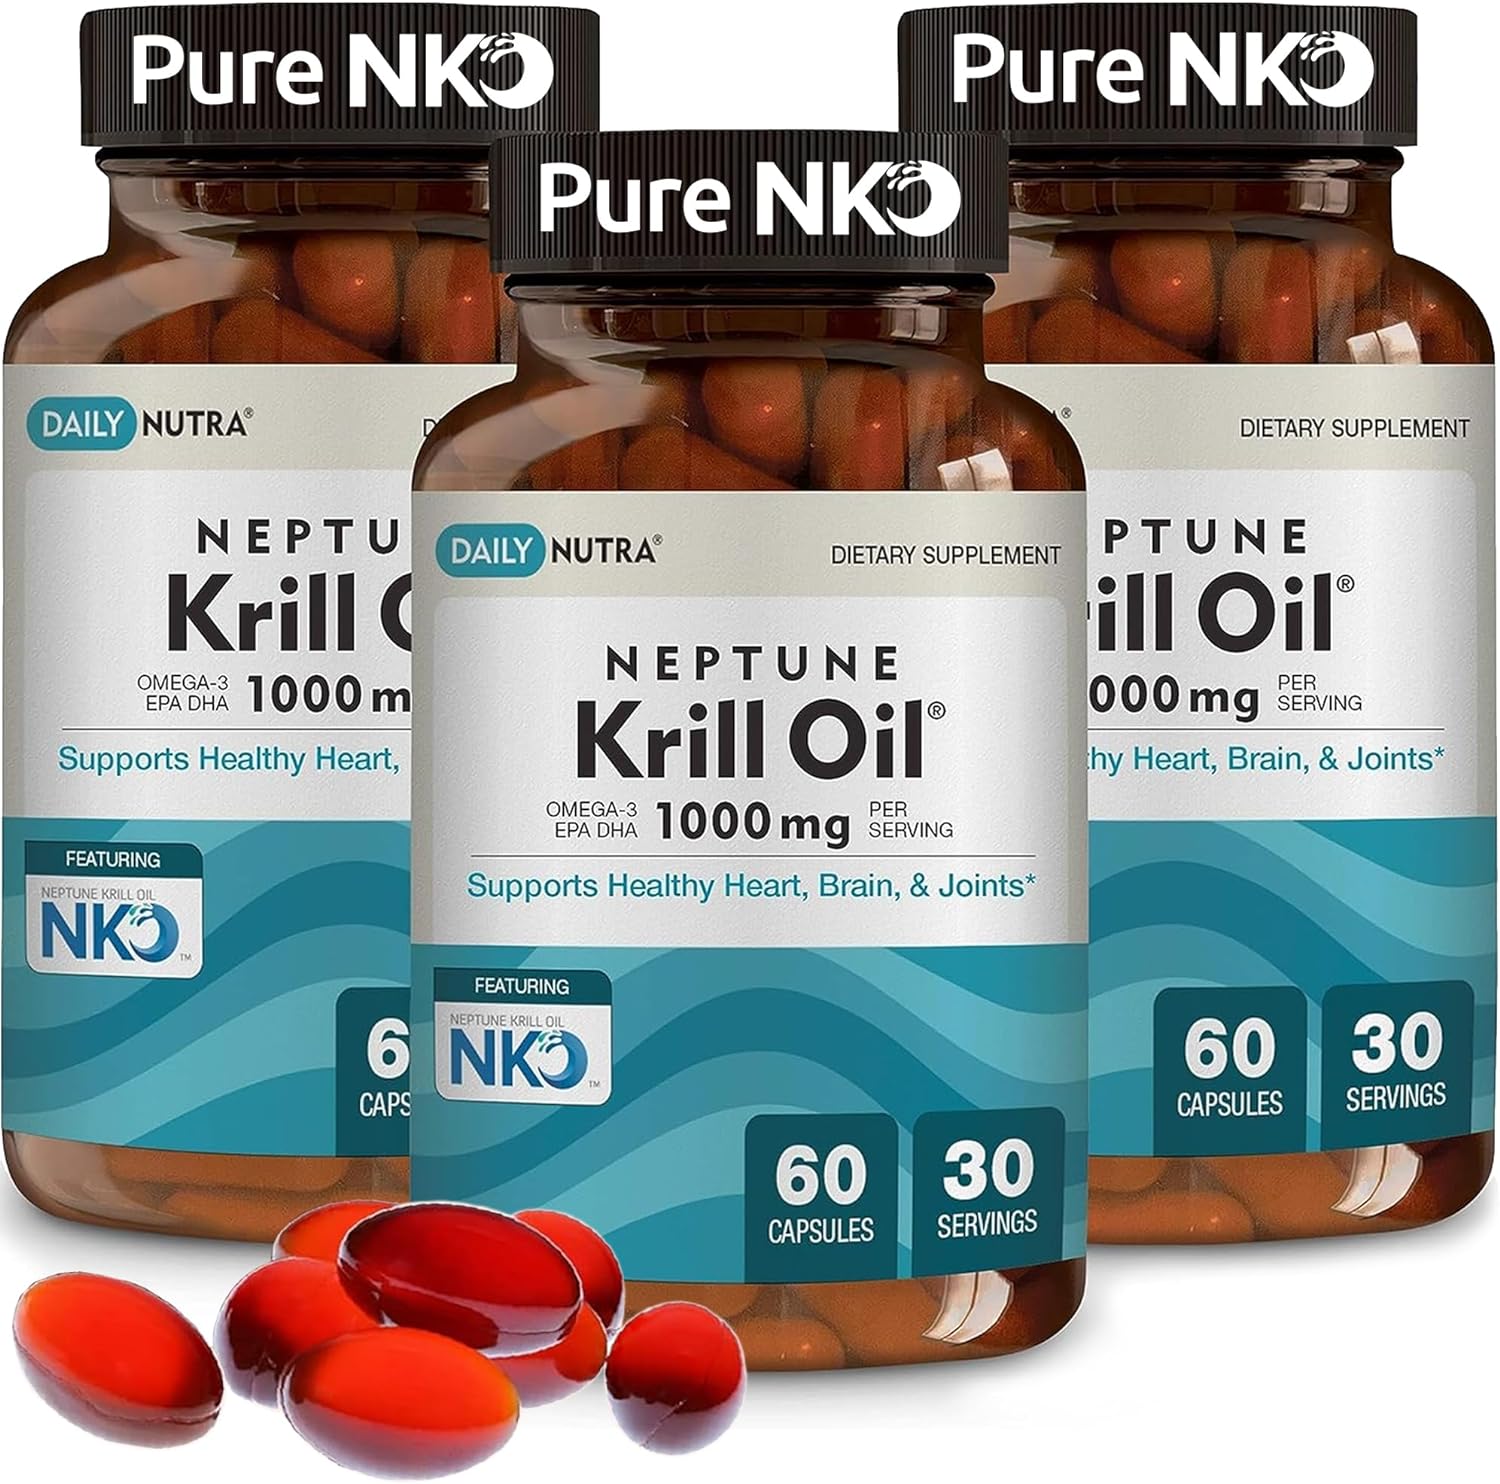 DailyNutra Neptune Krill Oil 1000mg - Antarctic Krill Oil Omega-3 Phos